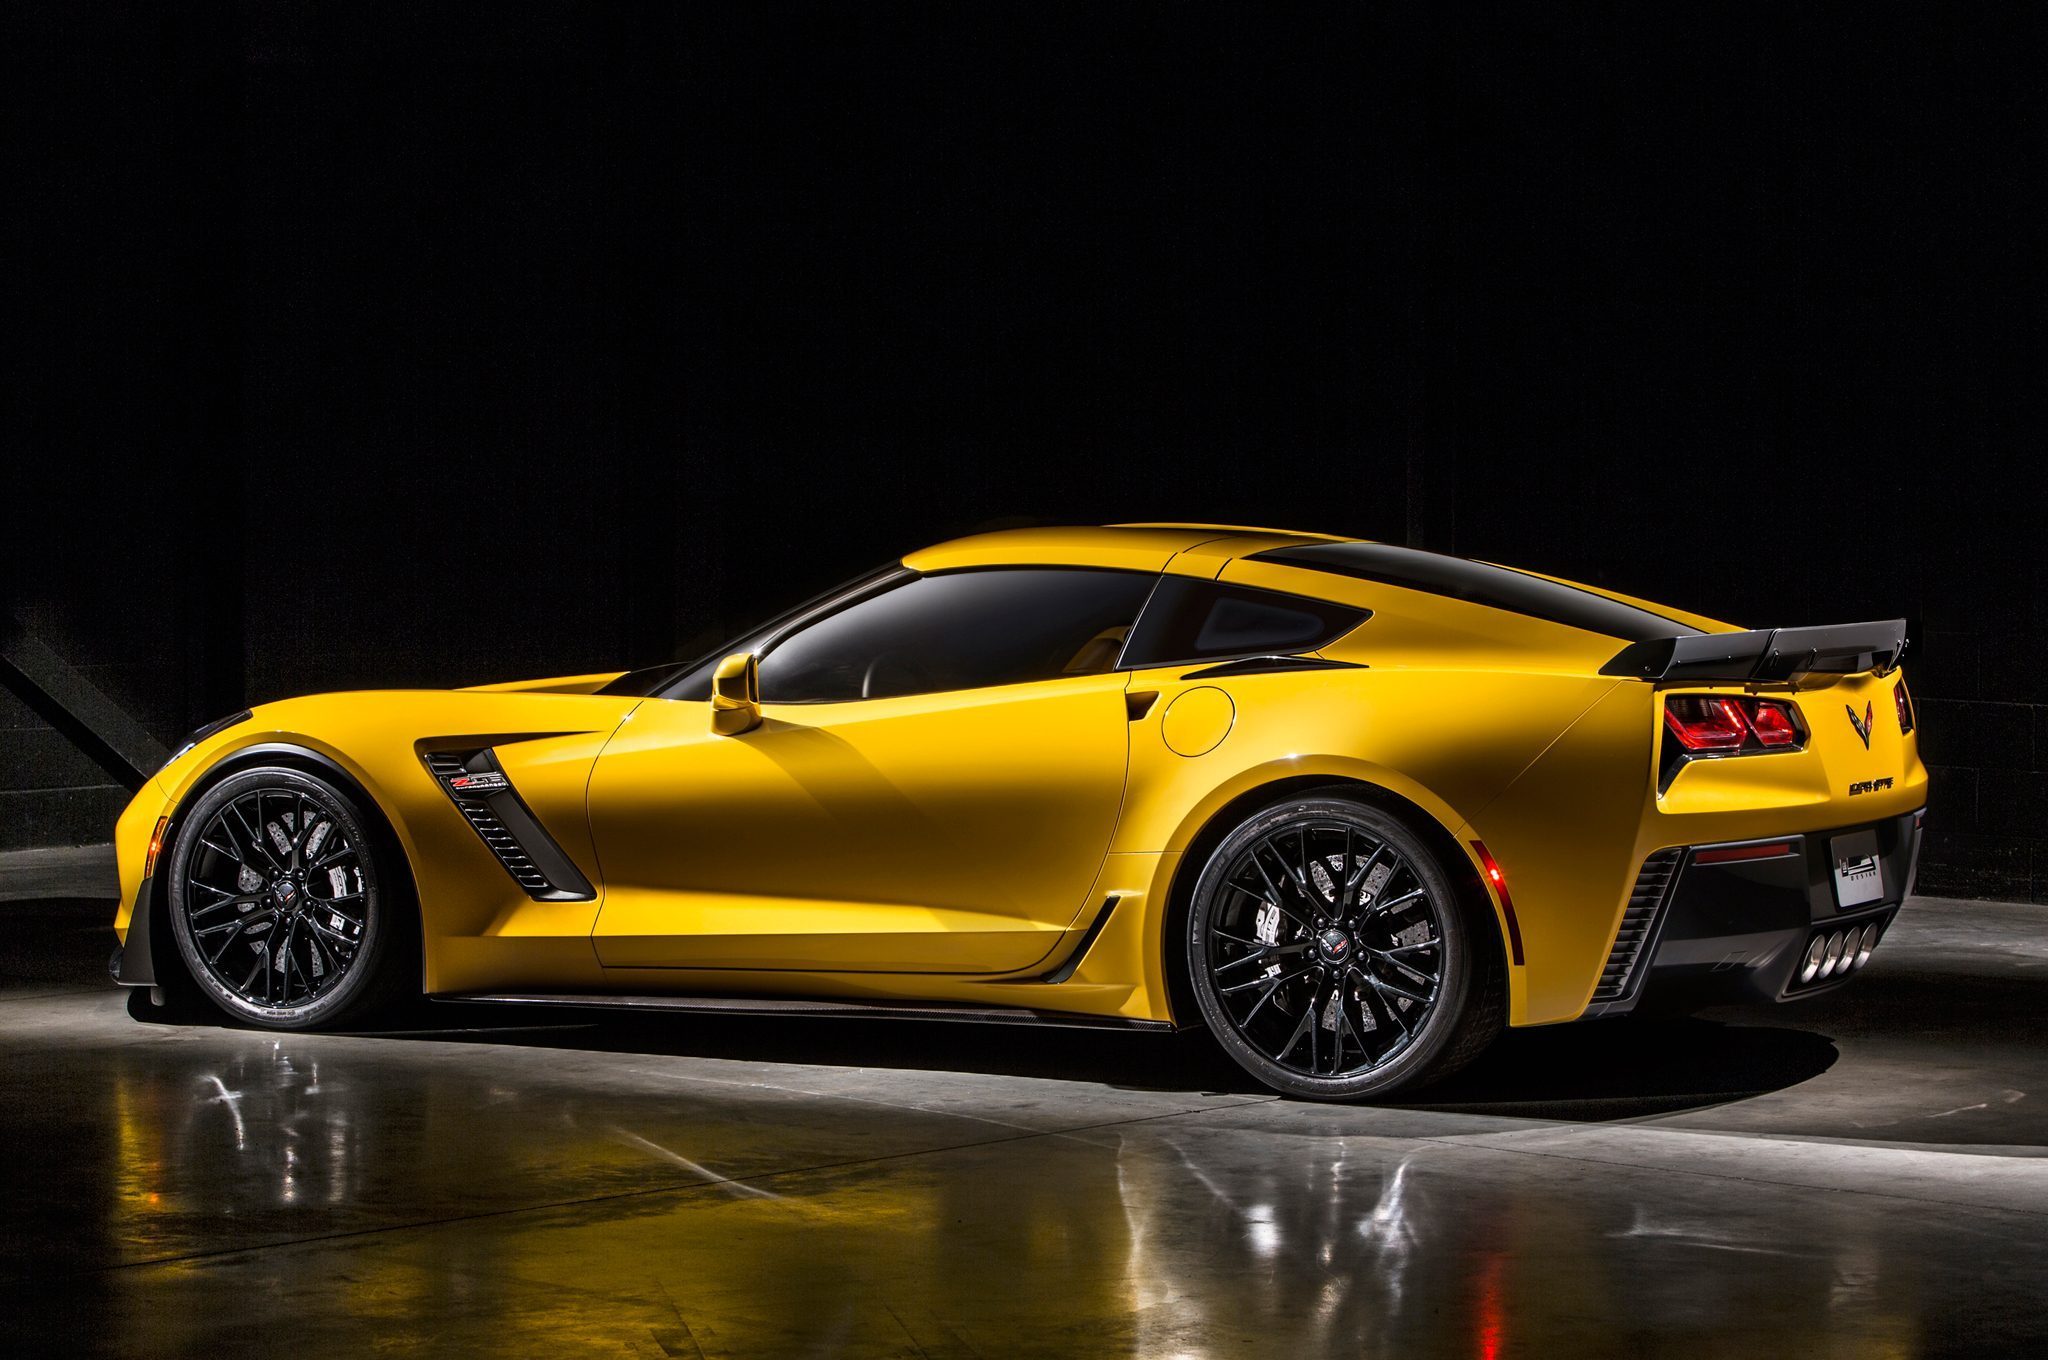 2015-chevrolet-corvette-z06-rear-side-profile-9061268-2103798-1943251